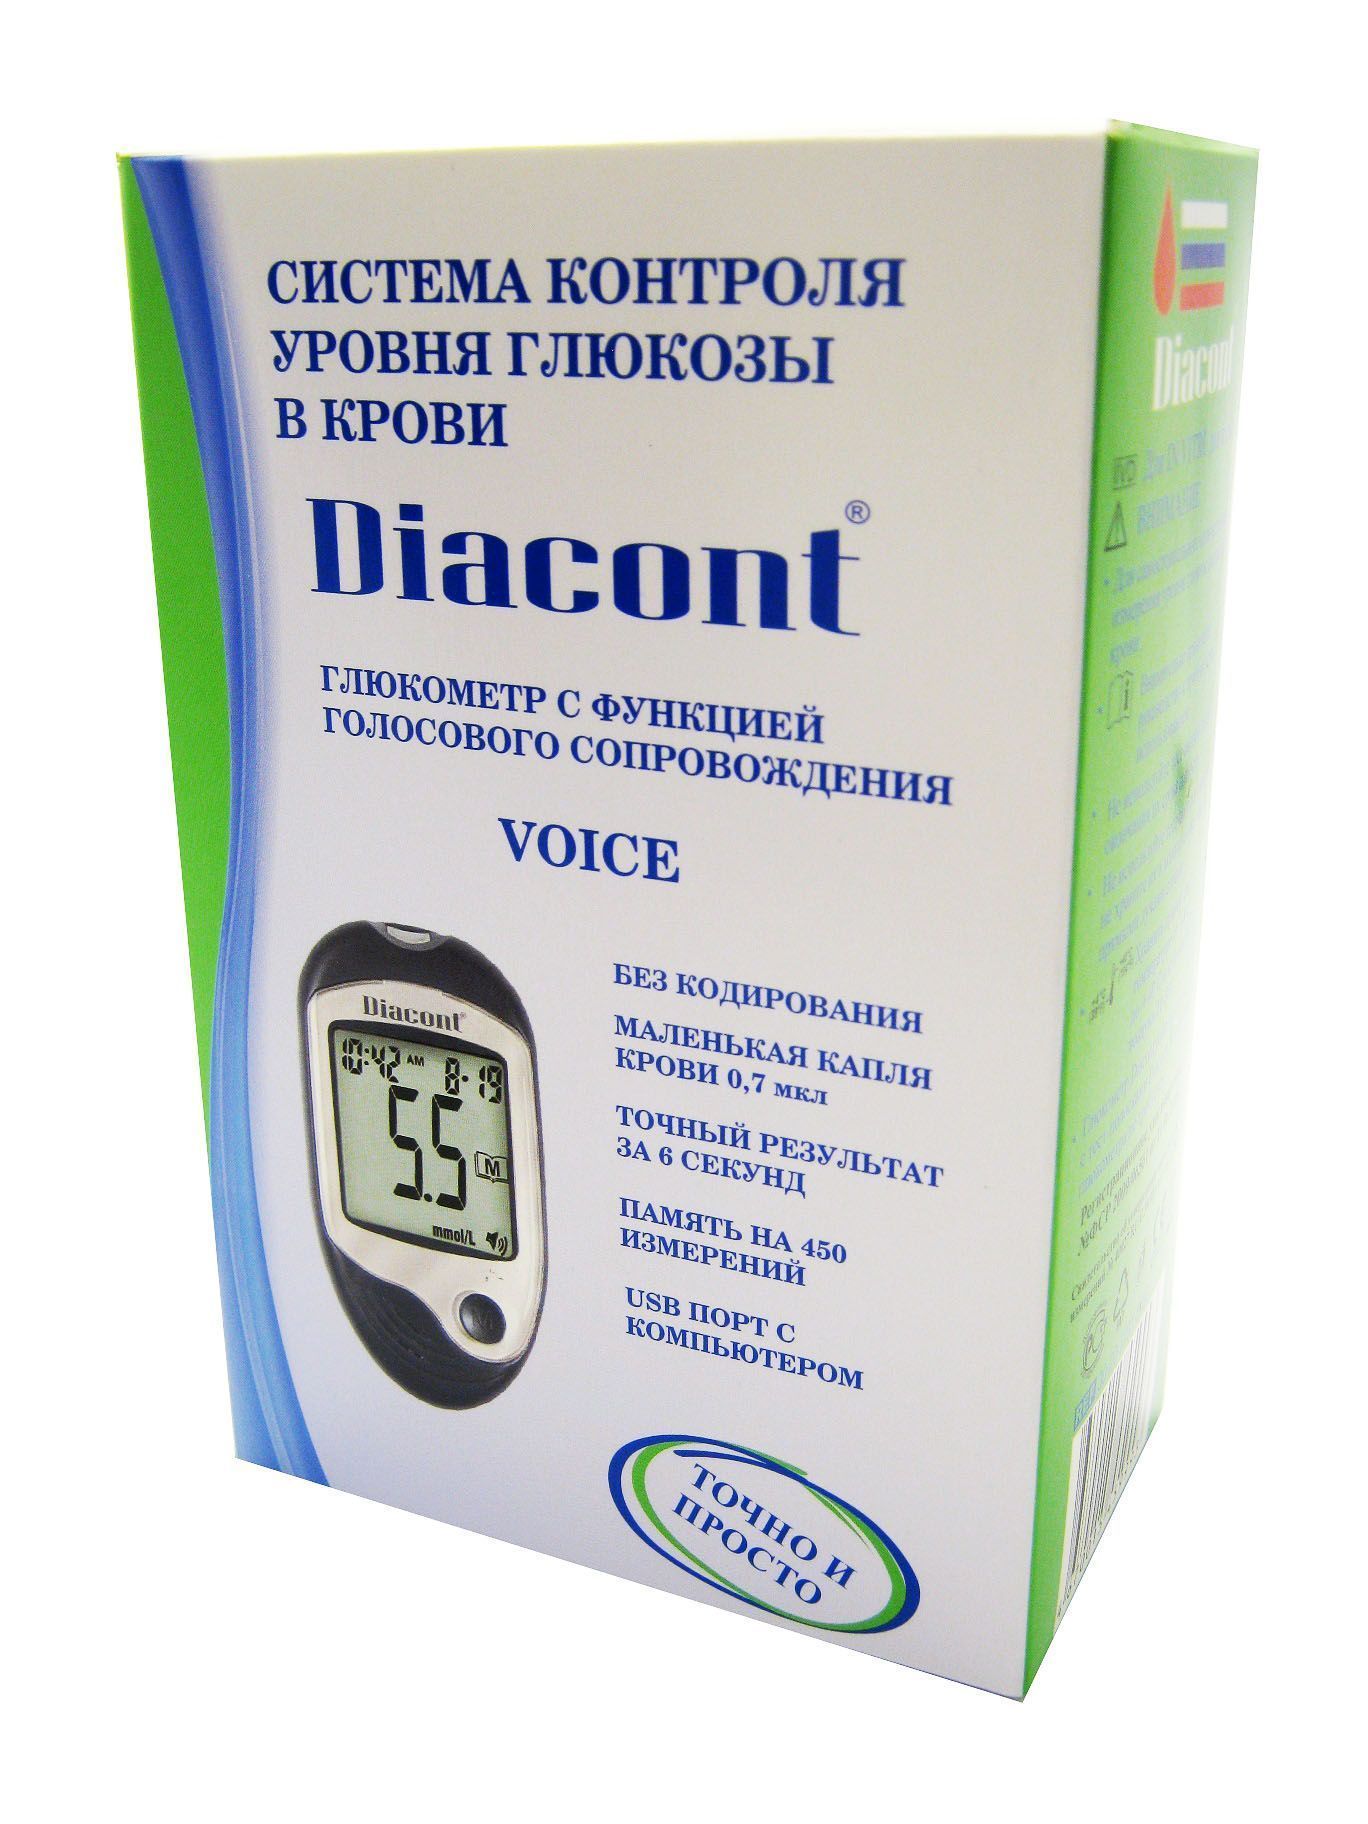 Глюкометр Диаконт говорящий